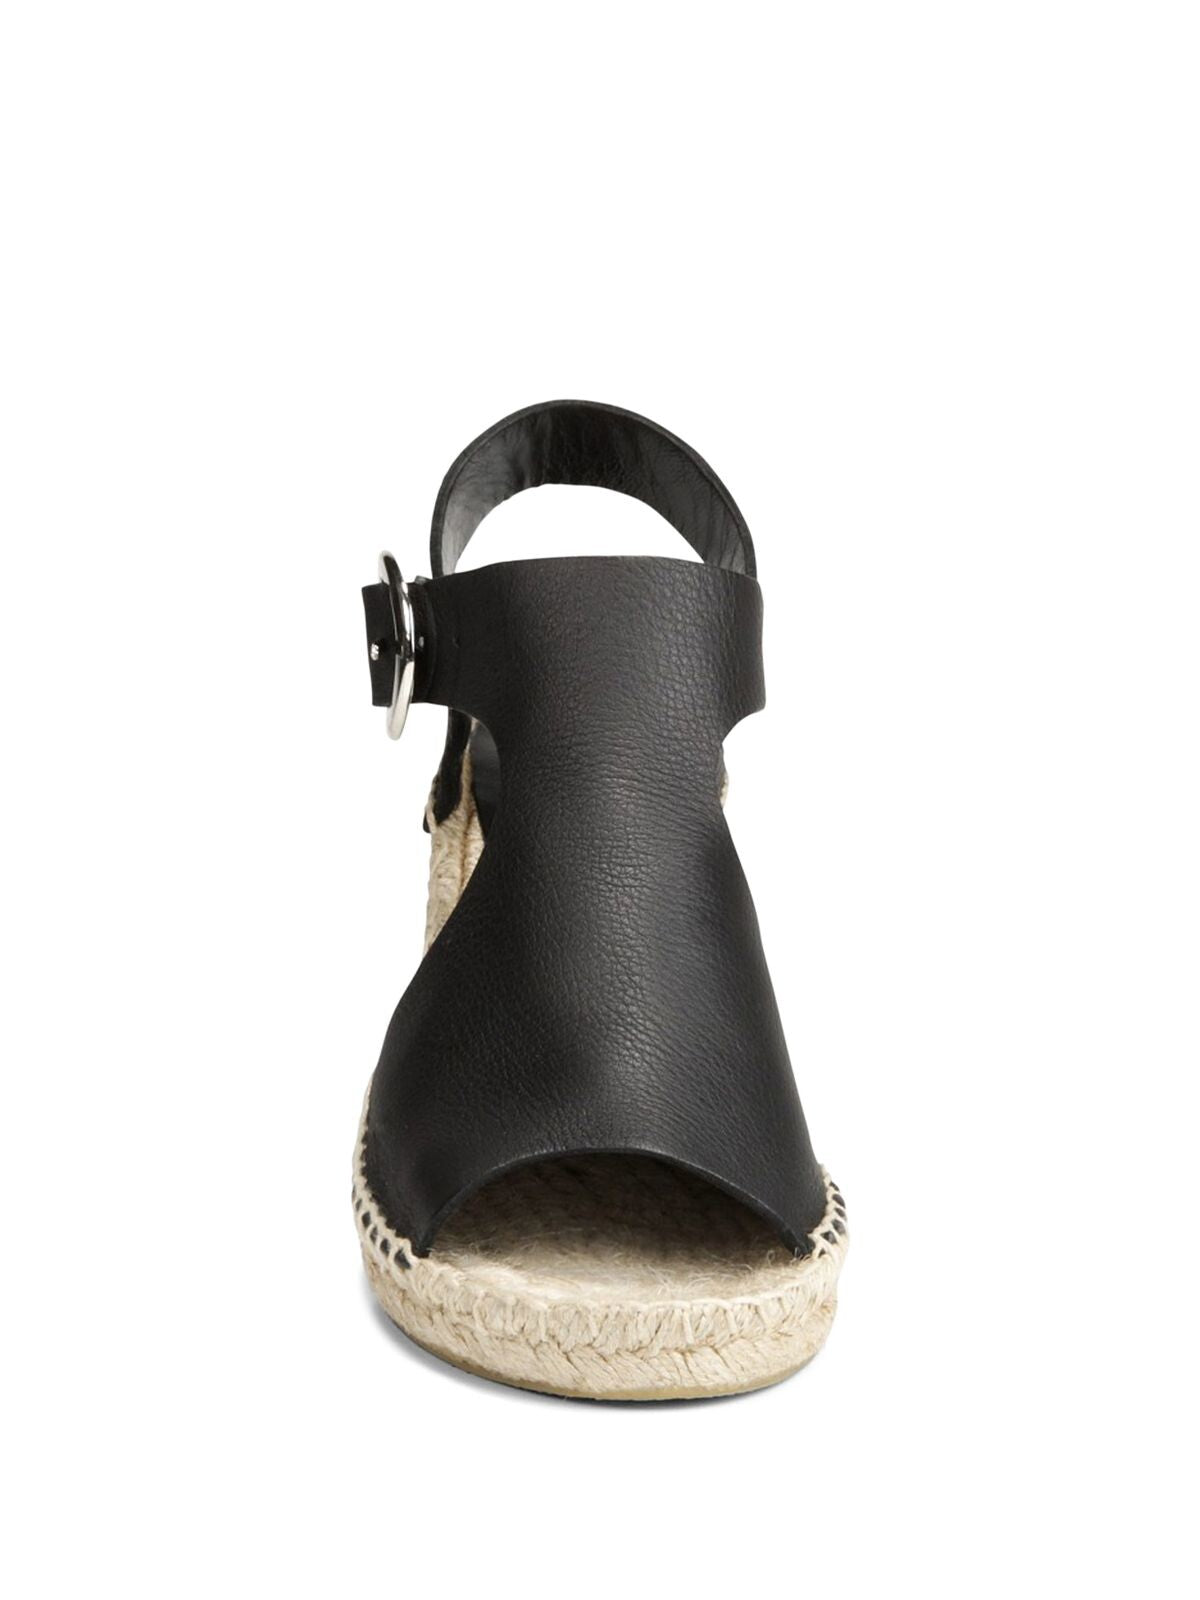 VIA SPIGA Womens Black Cutouts Adjustable Strap Nolan Wedge Buckle Leather Dress Espadrille Shoes M